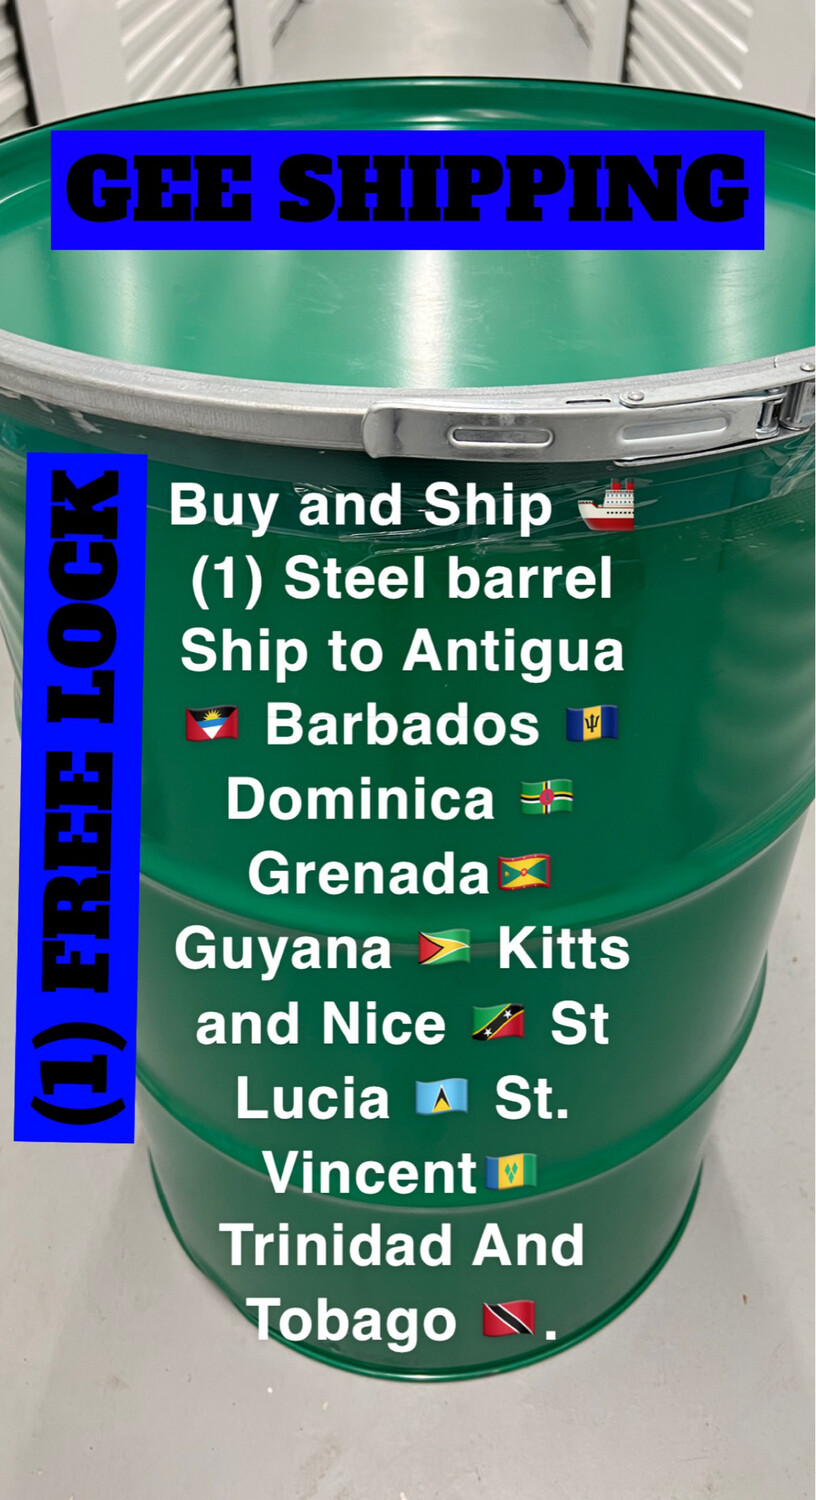 Buy and Ship (1) Steel Barrel to Antigua🇦🇬 Barbados🇧🇧 Dominica🇩🇲 Grenada🇬🇩Guyana 🇬🇾 Kitts and Nice 🇰🇳 Jamaica Kingston🇯🇲 St Lucia 🇱🇨 St. Vincent🇻🇨 Trinidad & Tobago🇹🇹.